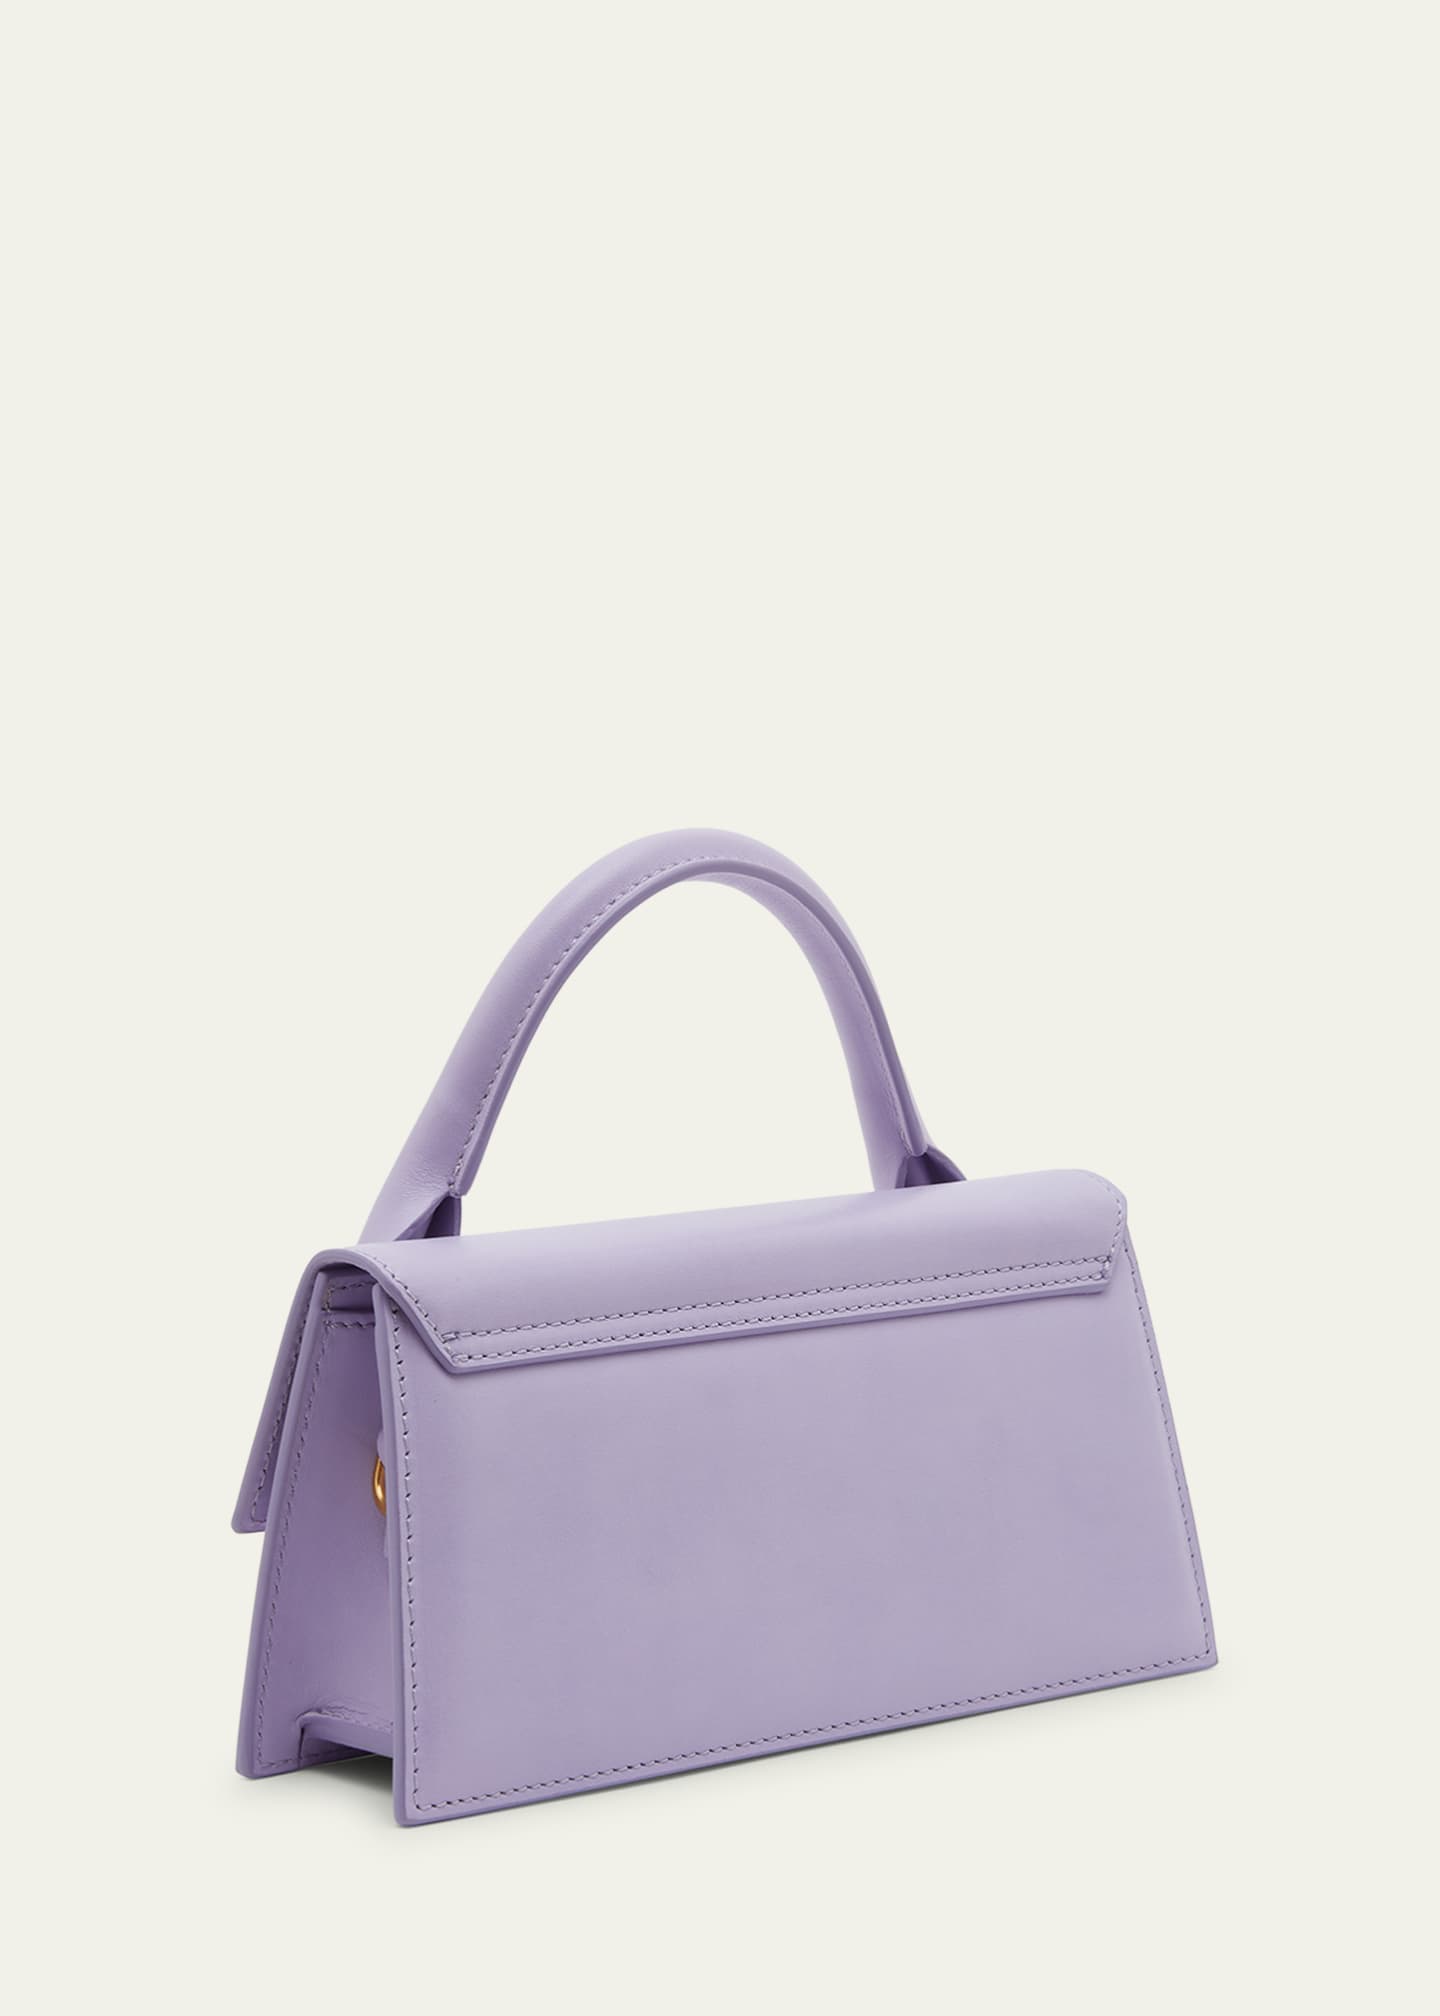 Jacquemus Le Chiquito Long Top-Handle Bag, Lilac, Women's, Handbags & Purses Top Handle Bags